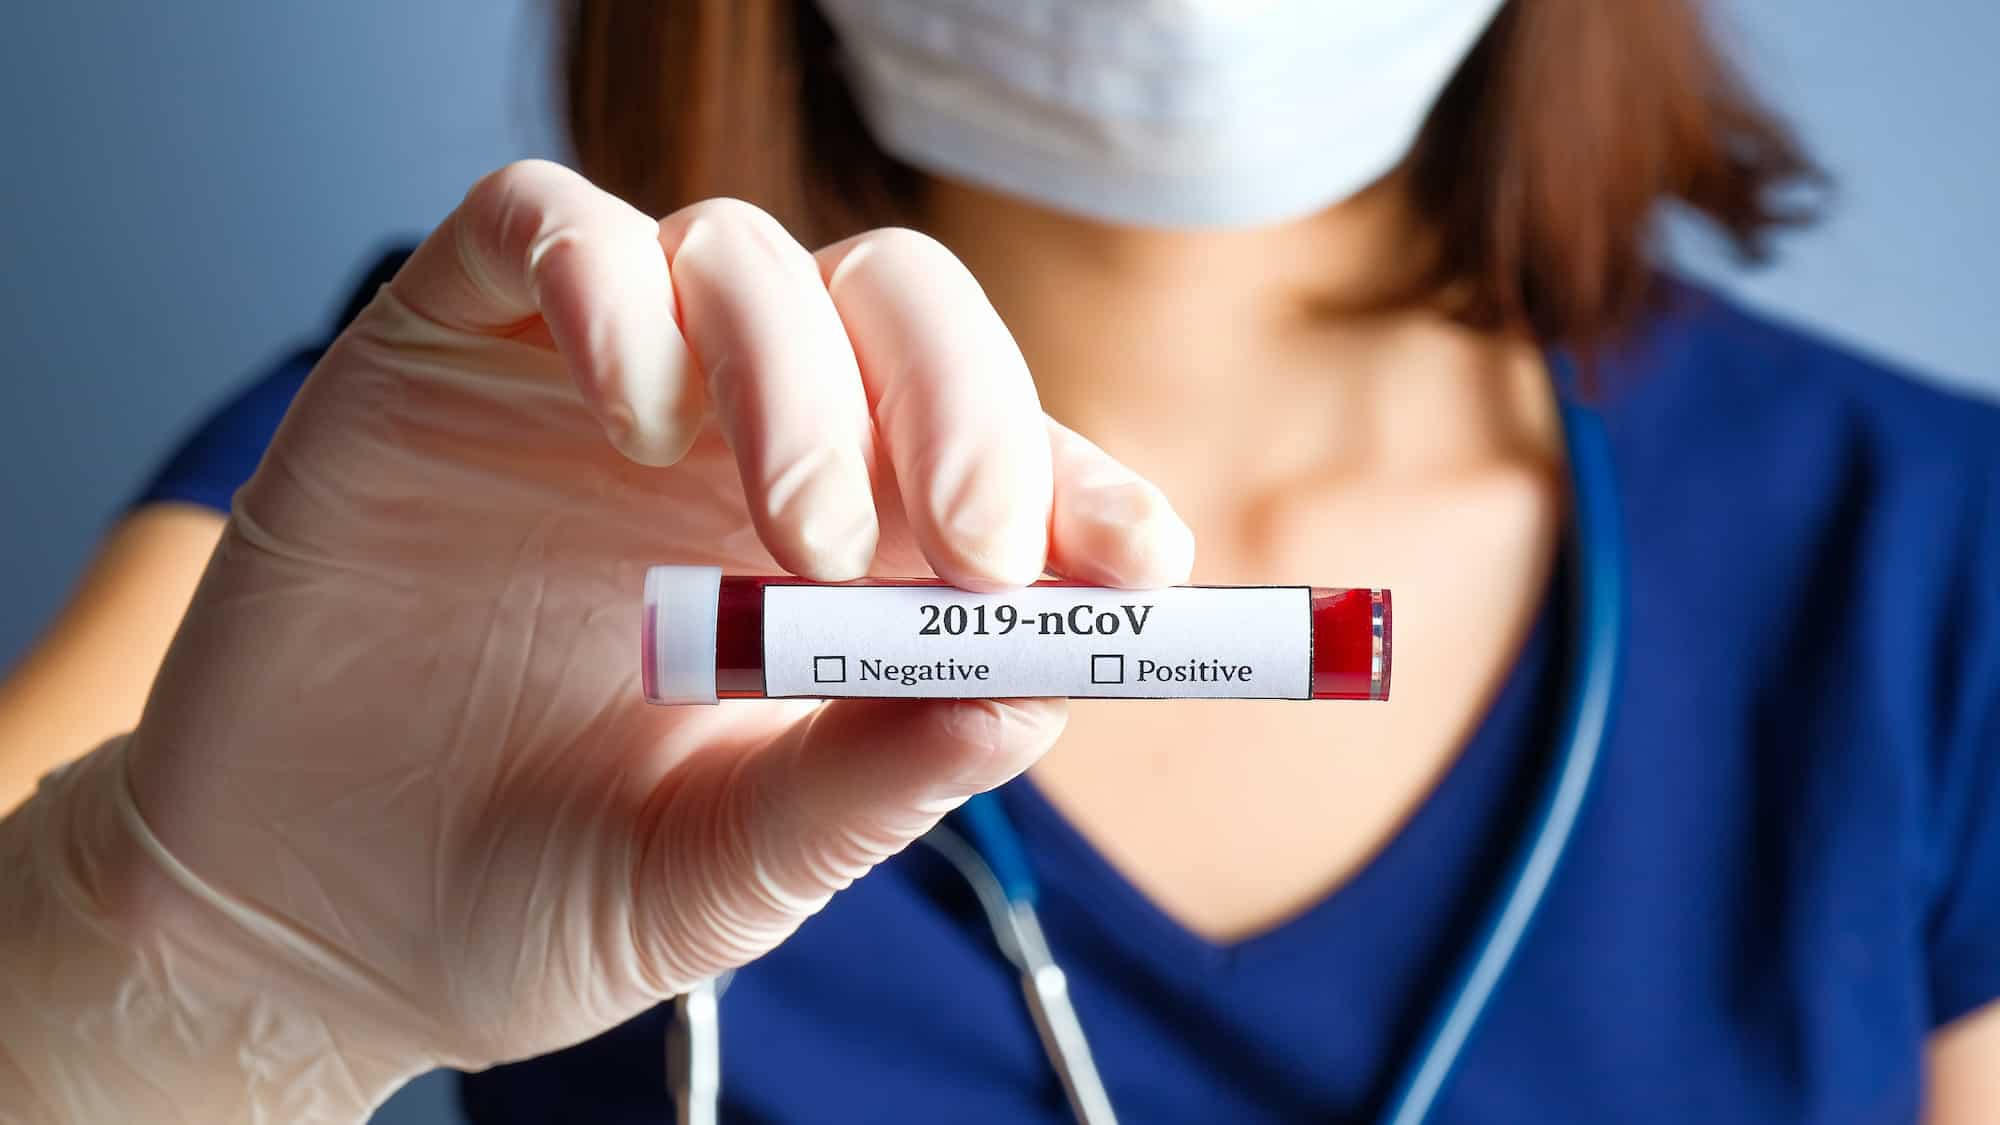 Nurse holding covid-19 antibody test tube with blood for 2019-nCoV analyz Coronavirus blood test concept